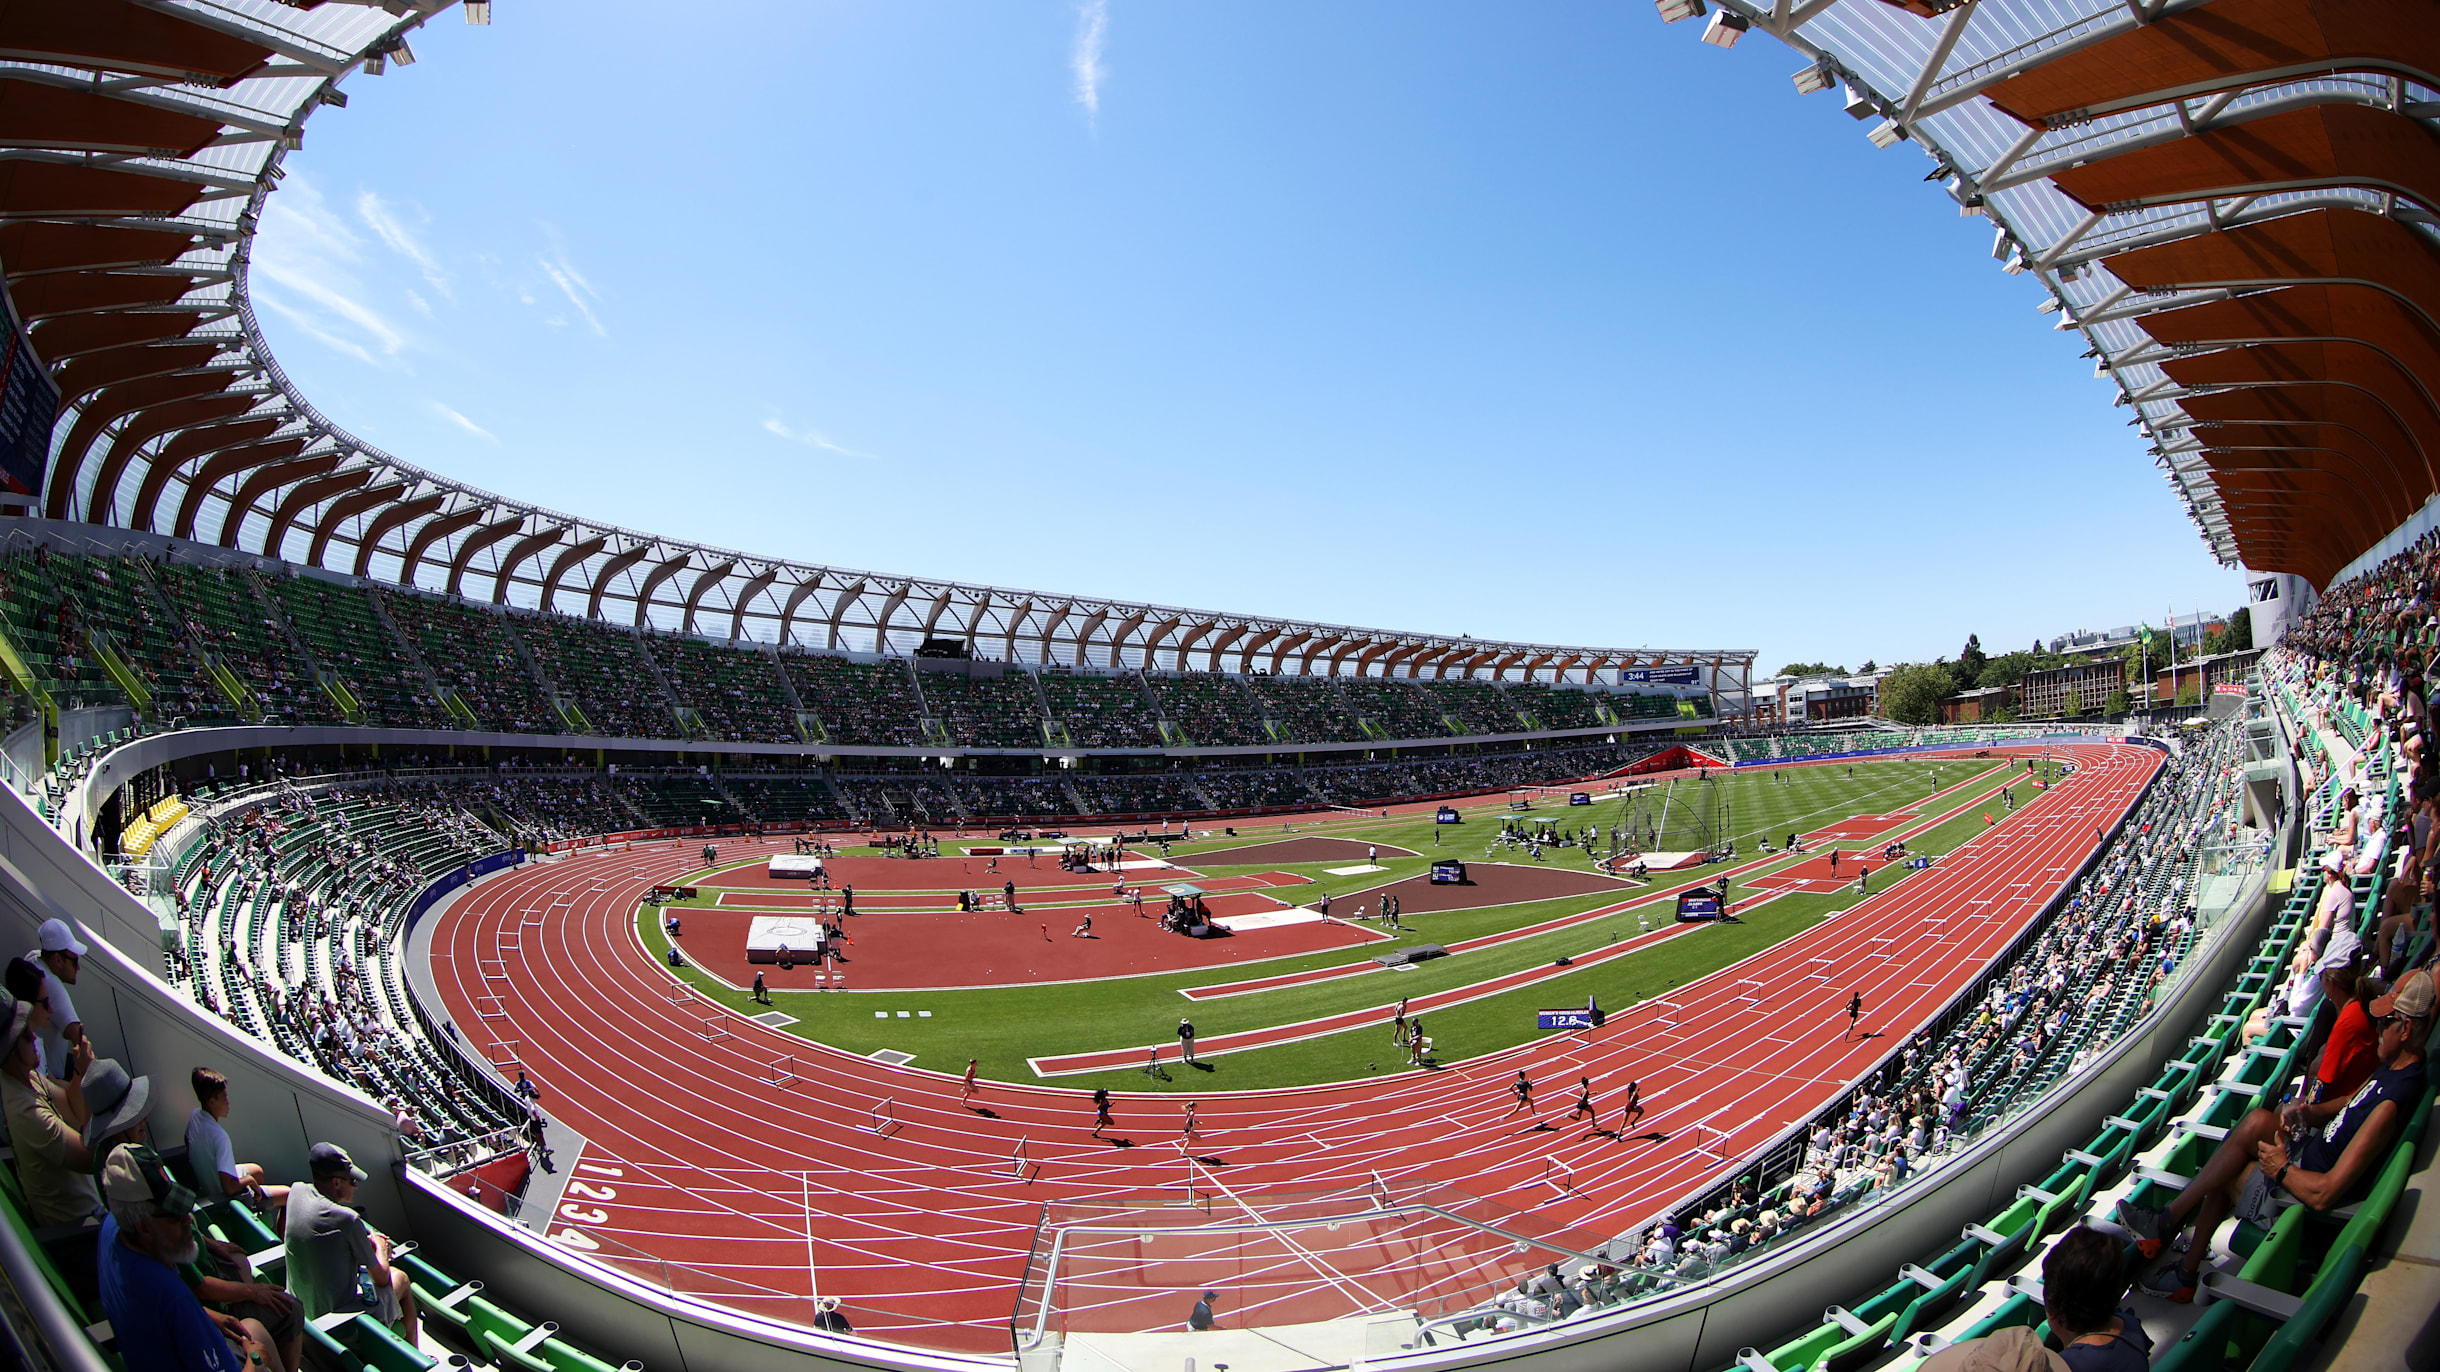 WCH Oregon22 produces 13 World Athletics Championships records, News, Oregon 22